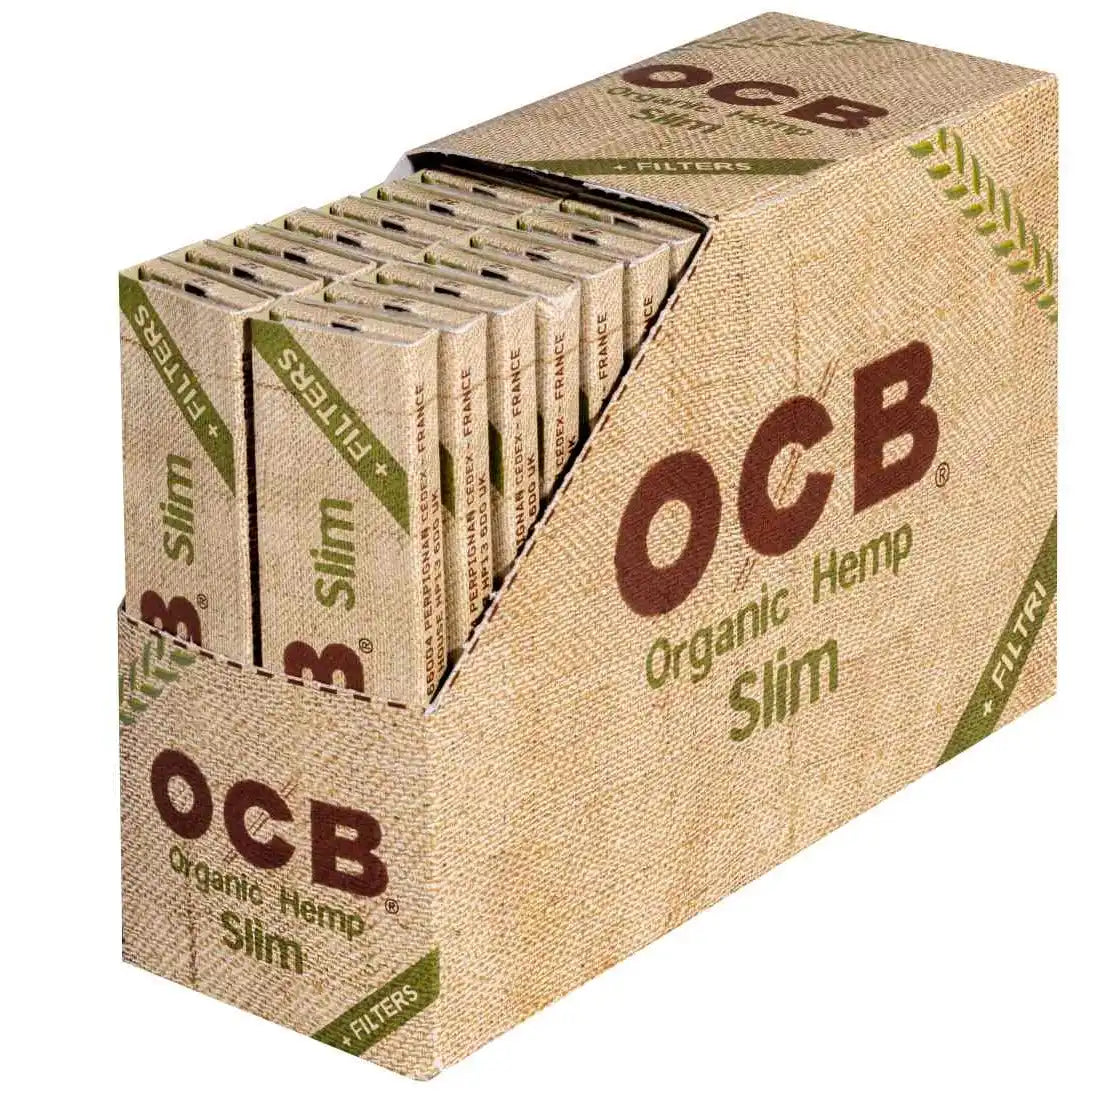 OCB Organic Hemp Slim with Filters Verpackungseinheit